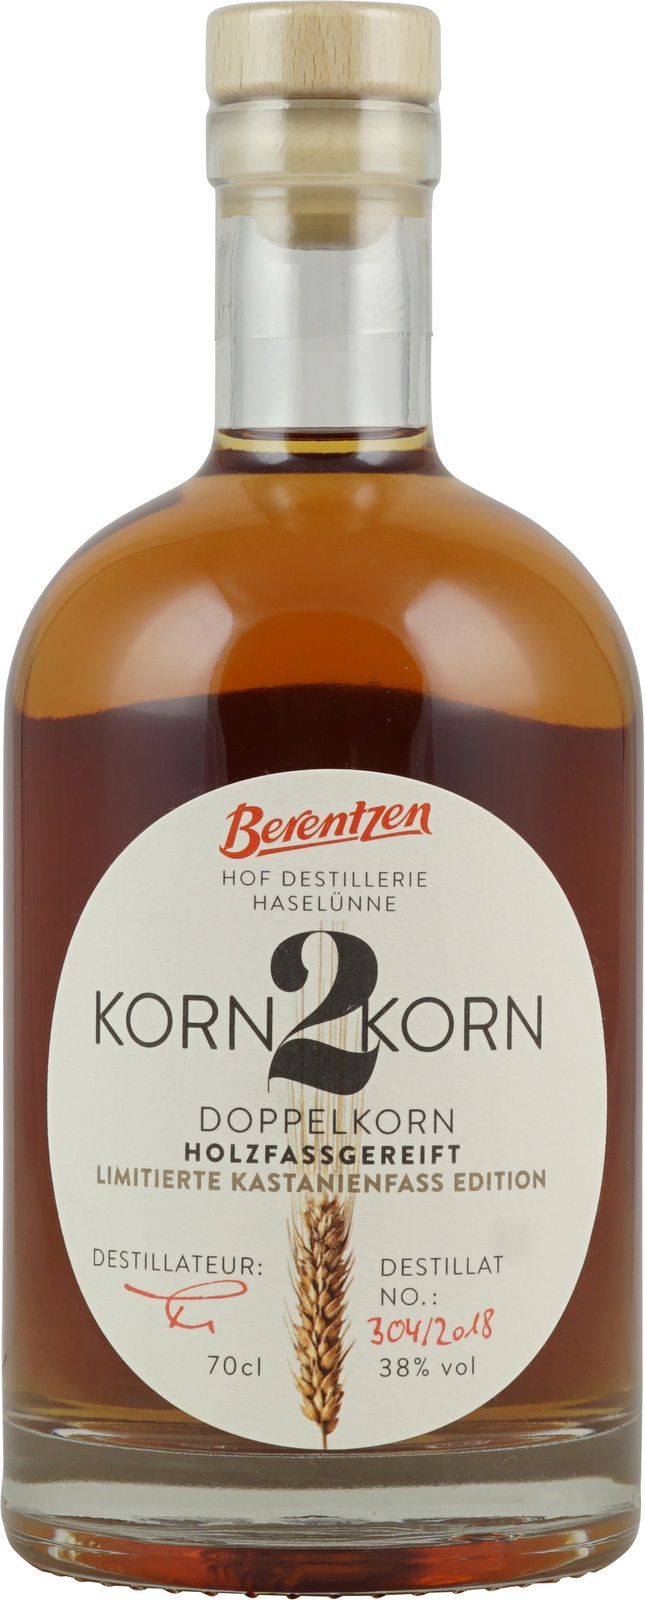 % 0,7 Korn2Korn Kastanie Liter K Vol., im Doppelkorn 38